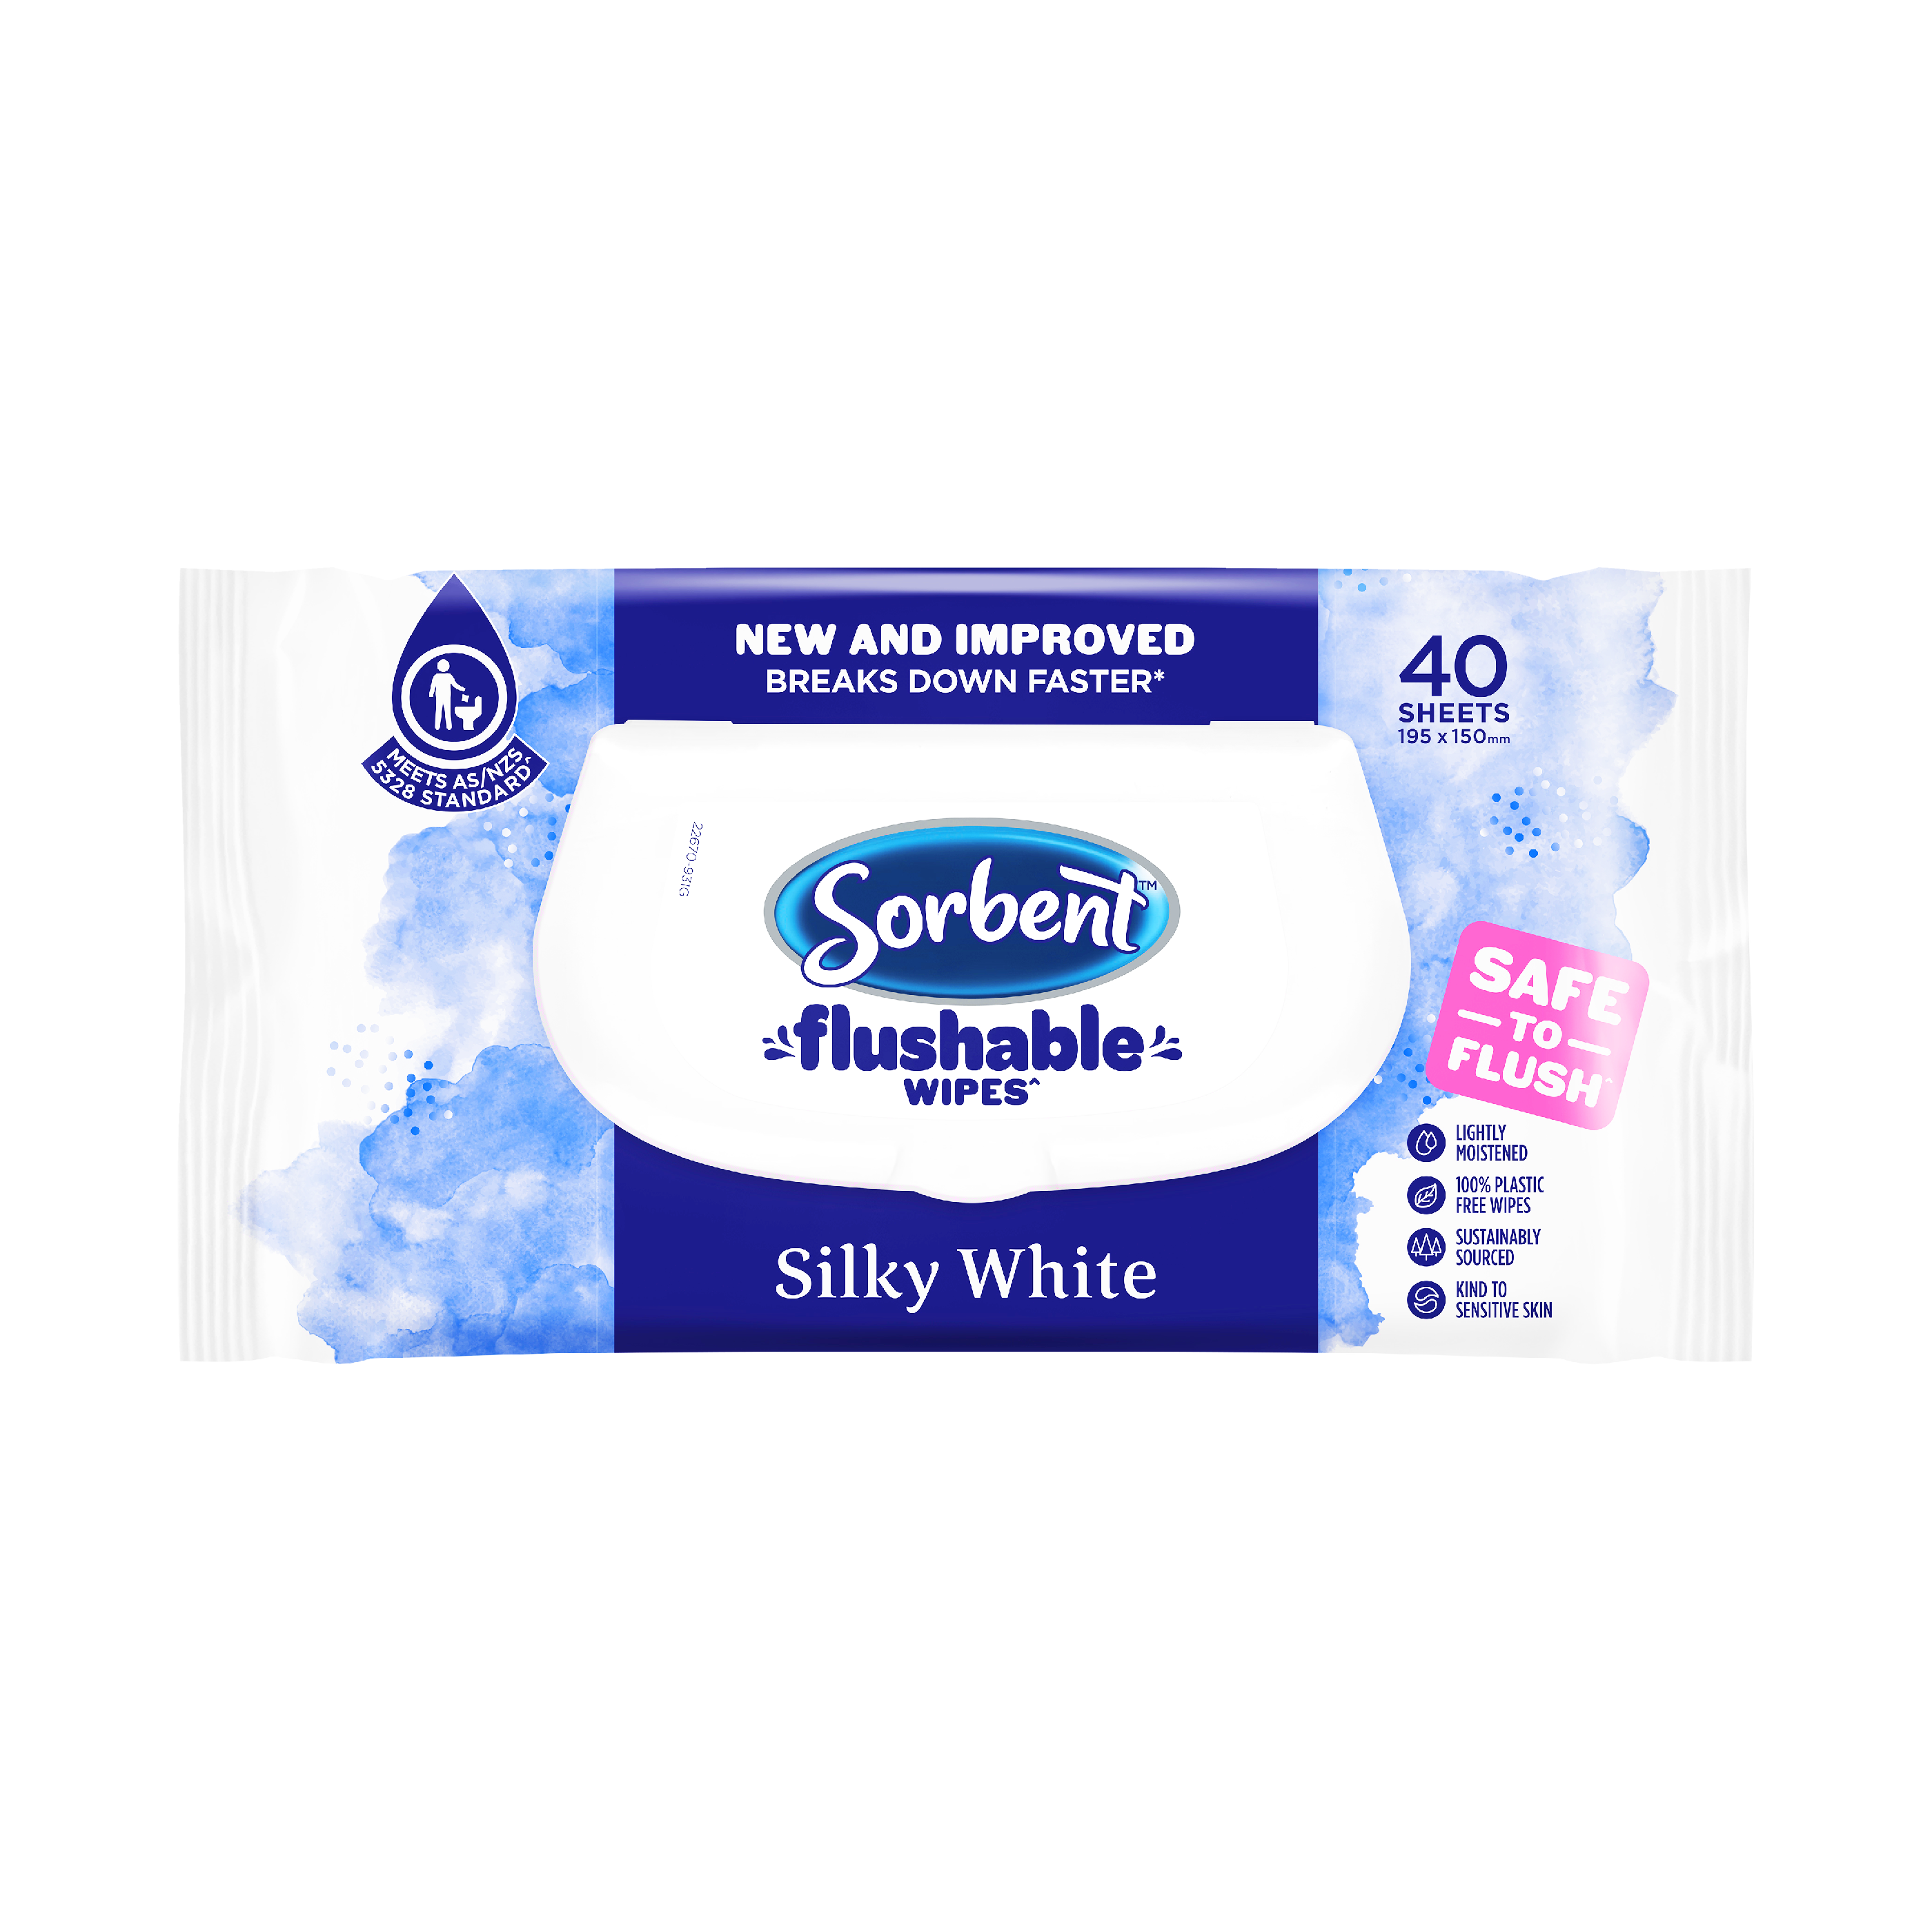 Silky White Flushable Wipes